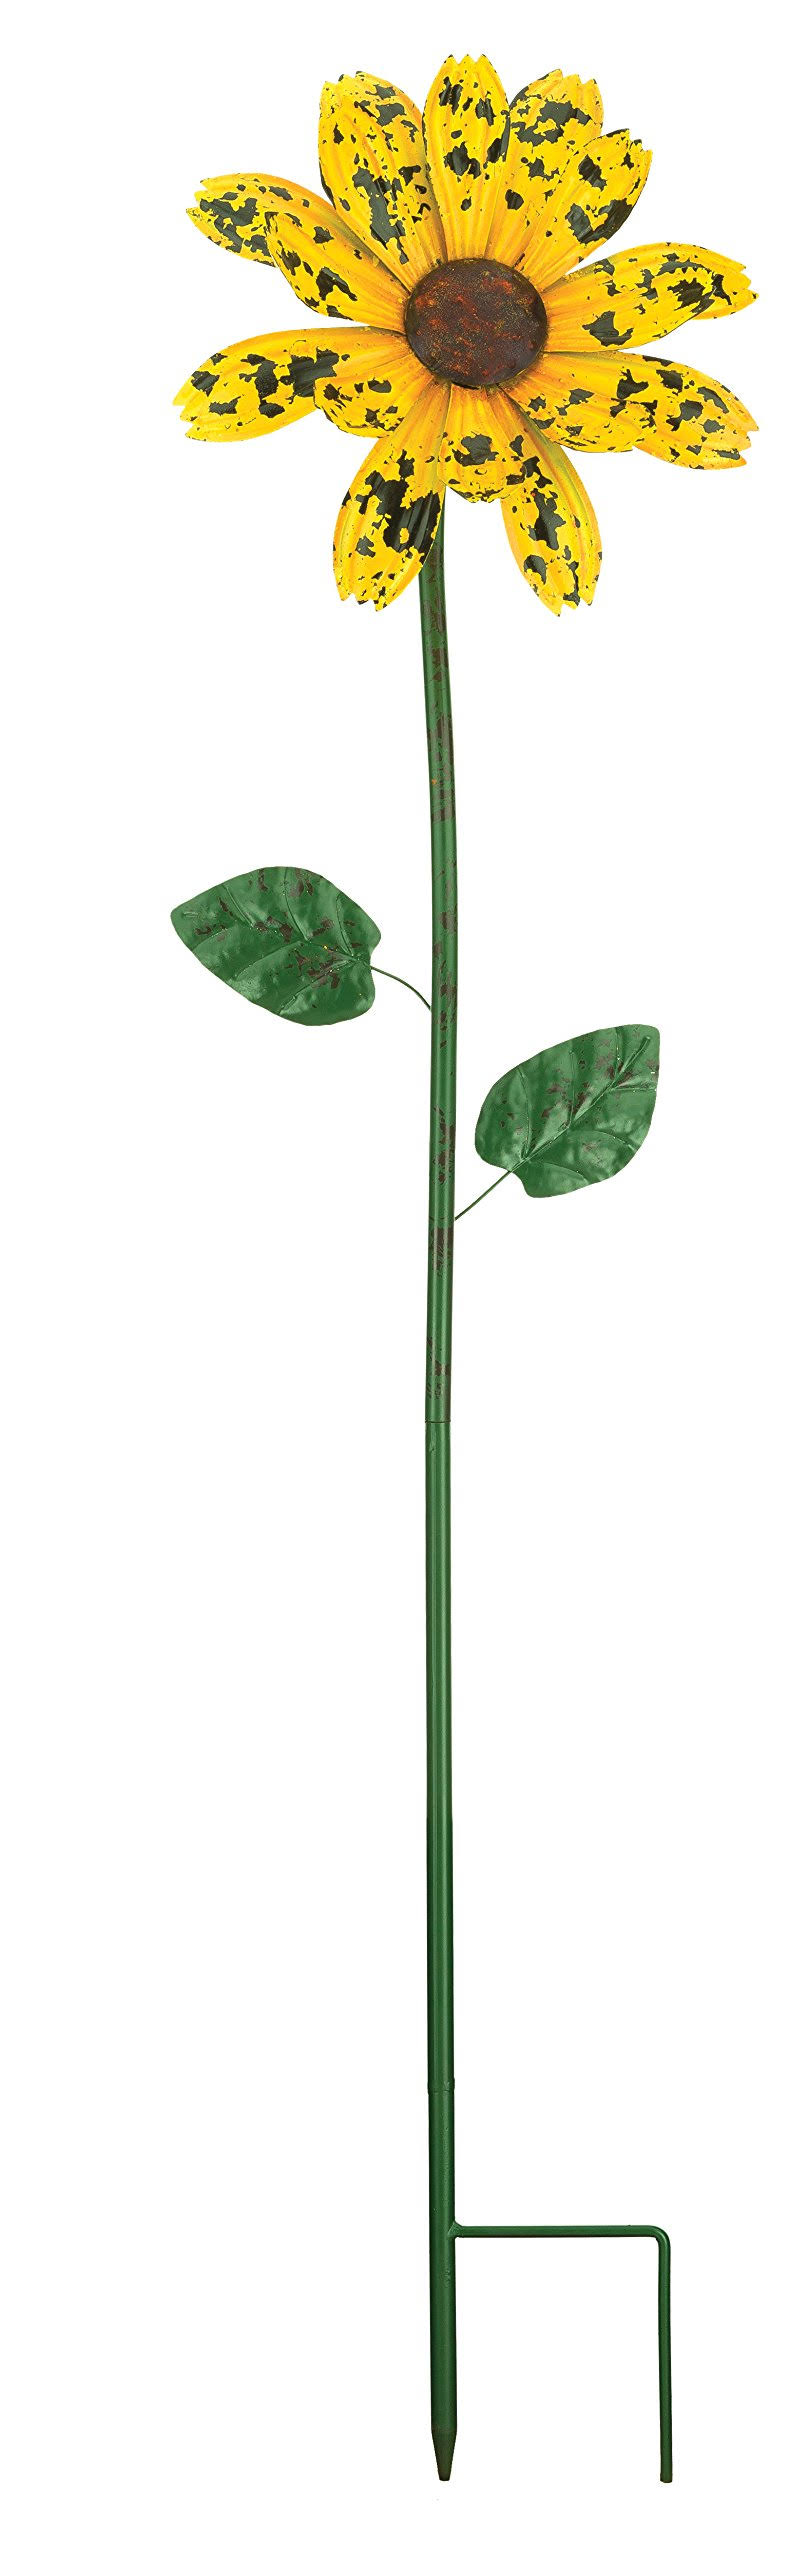 Regal Art & Gift Marigold Rustic Flower Stake, 46"